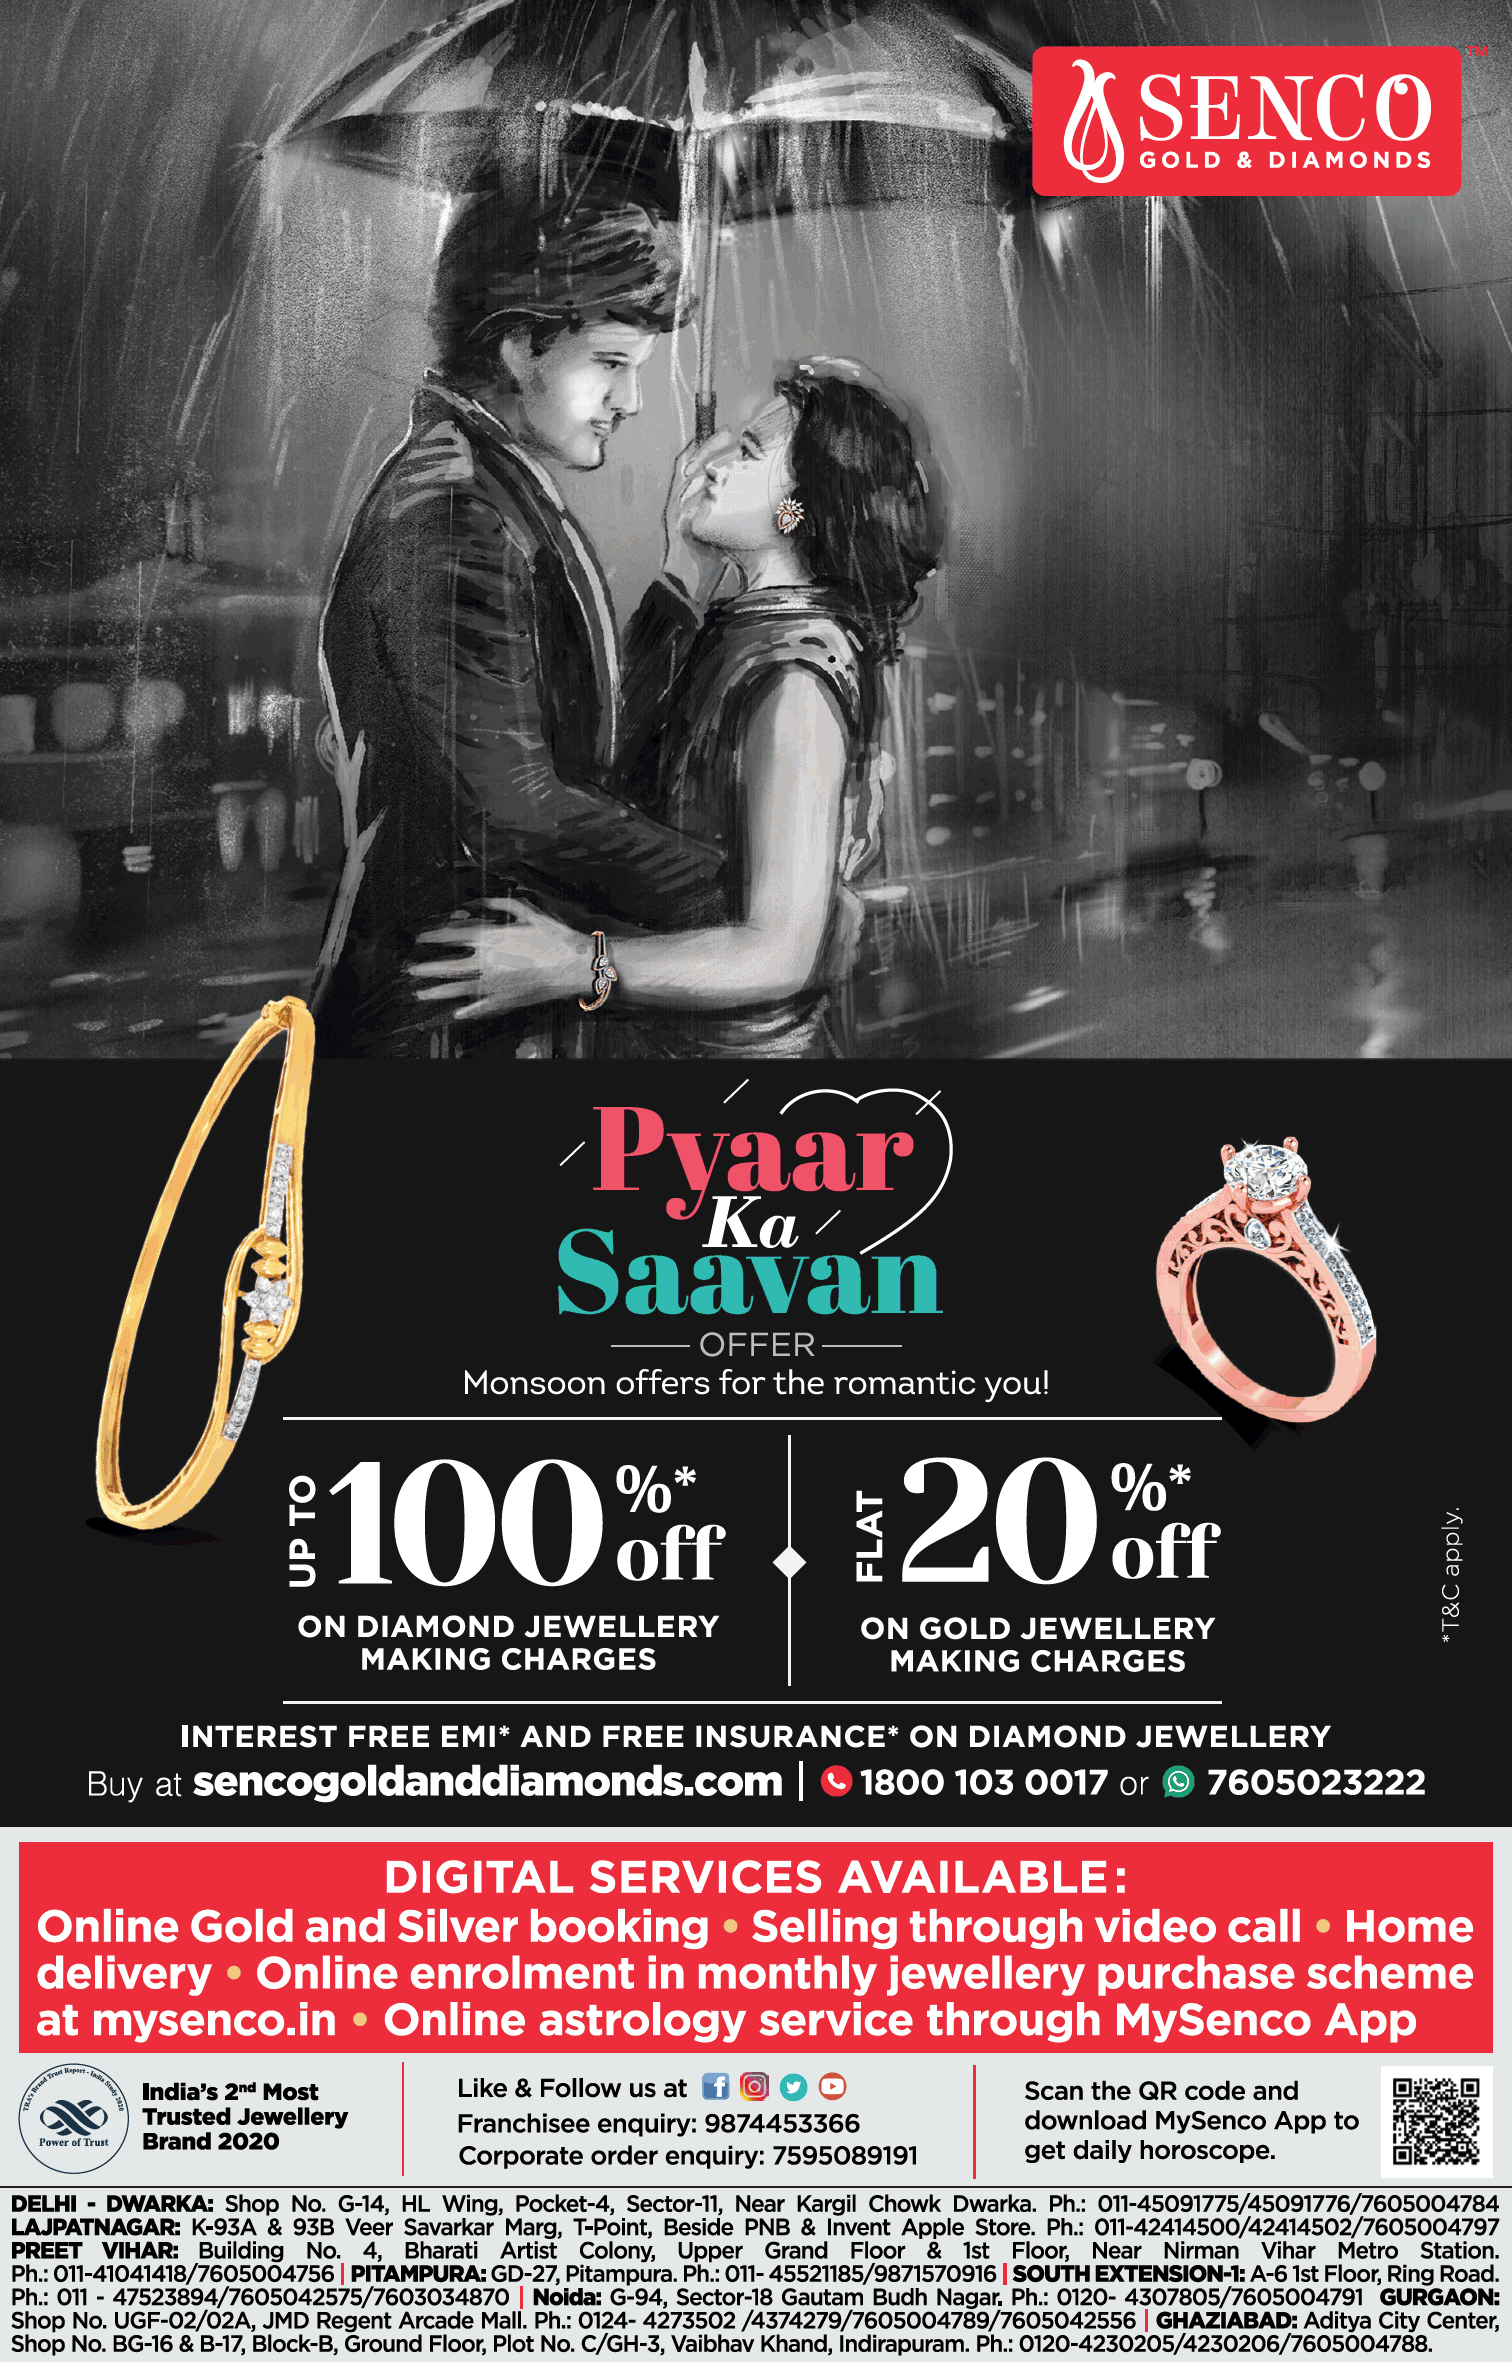 senco-gold-&-diamond-pyaar-ka-saavan-offer-monsoon-offers-for-the-romantic-you-ad-times-of-india-delhi-10-7-2021